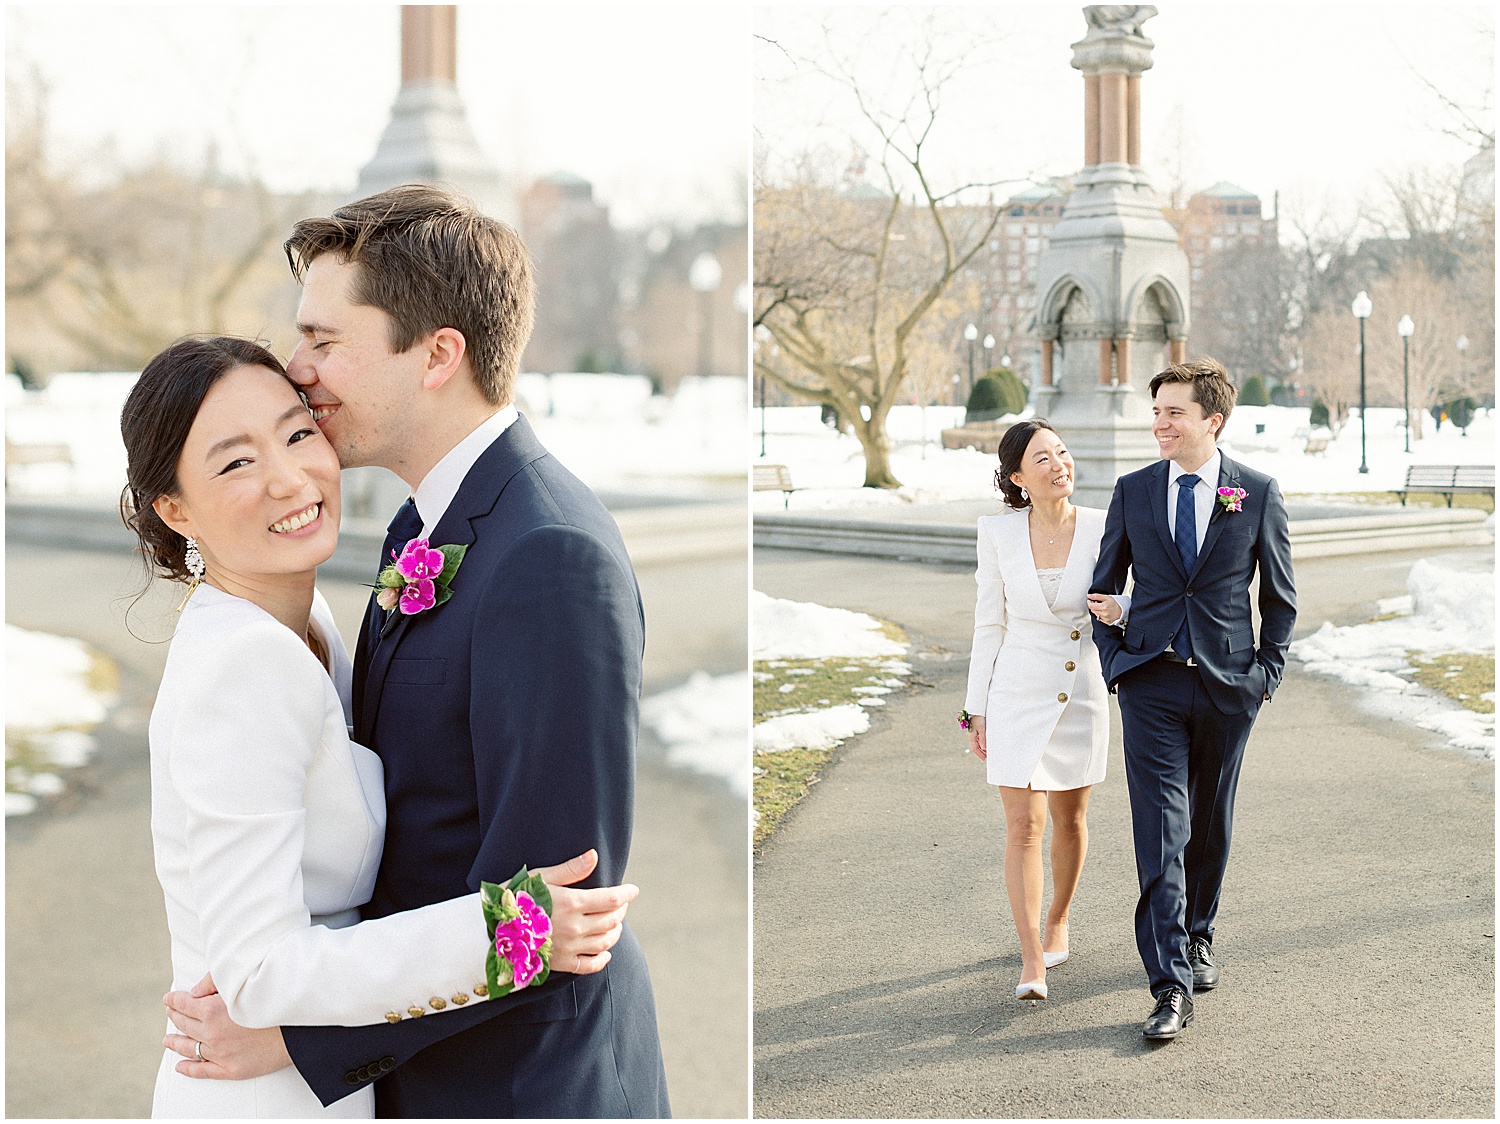 Winter elopement photos in the Boston Public Garden